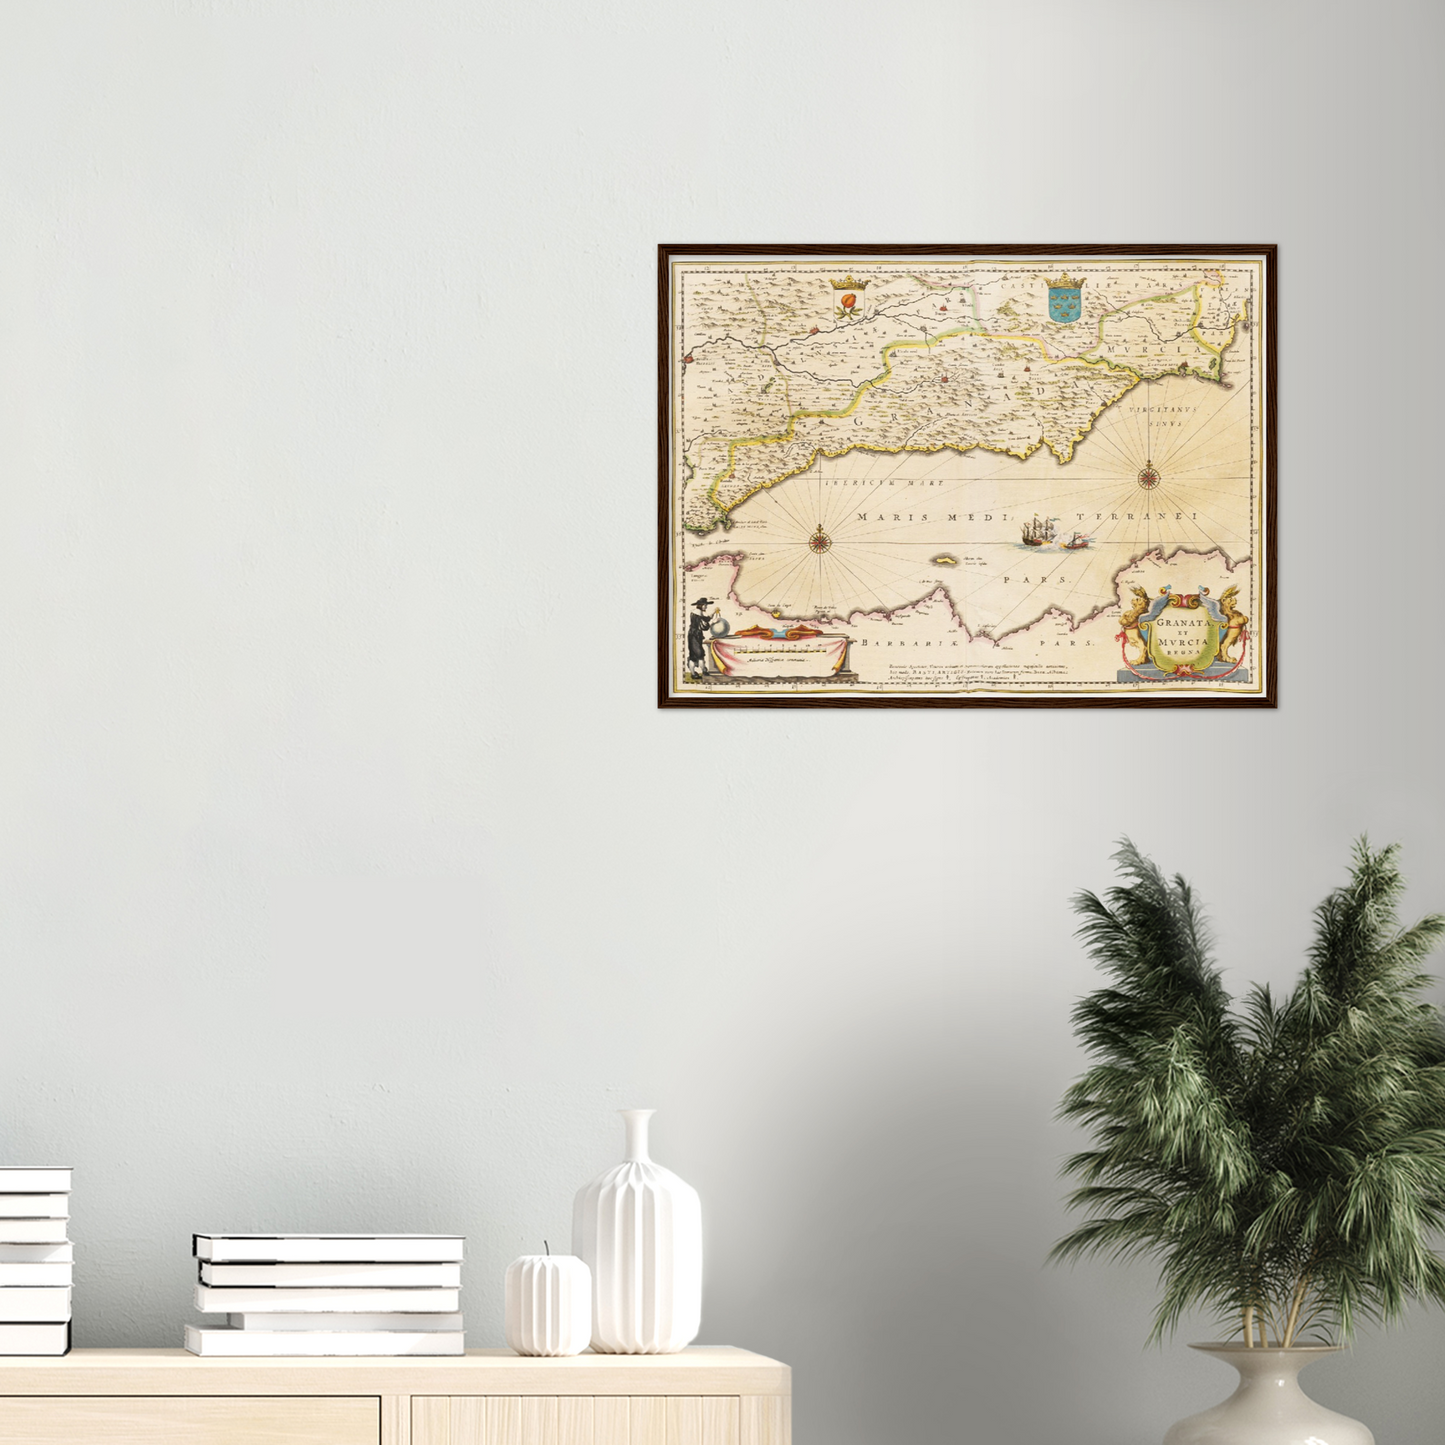 Historische Landkarte Murcia & Granada um 1635